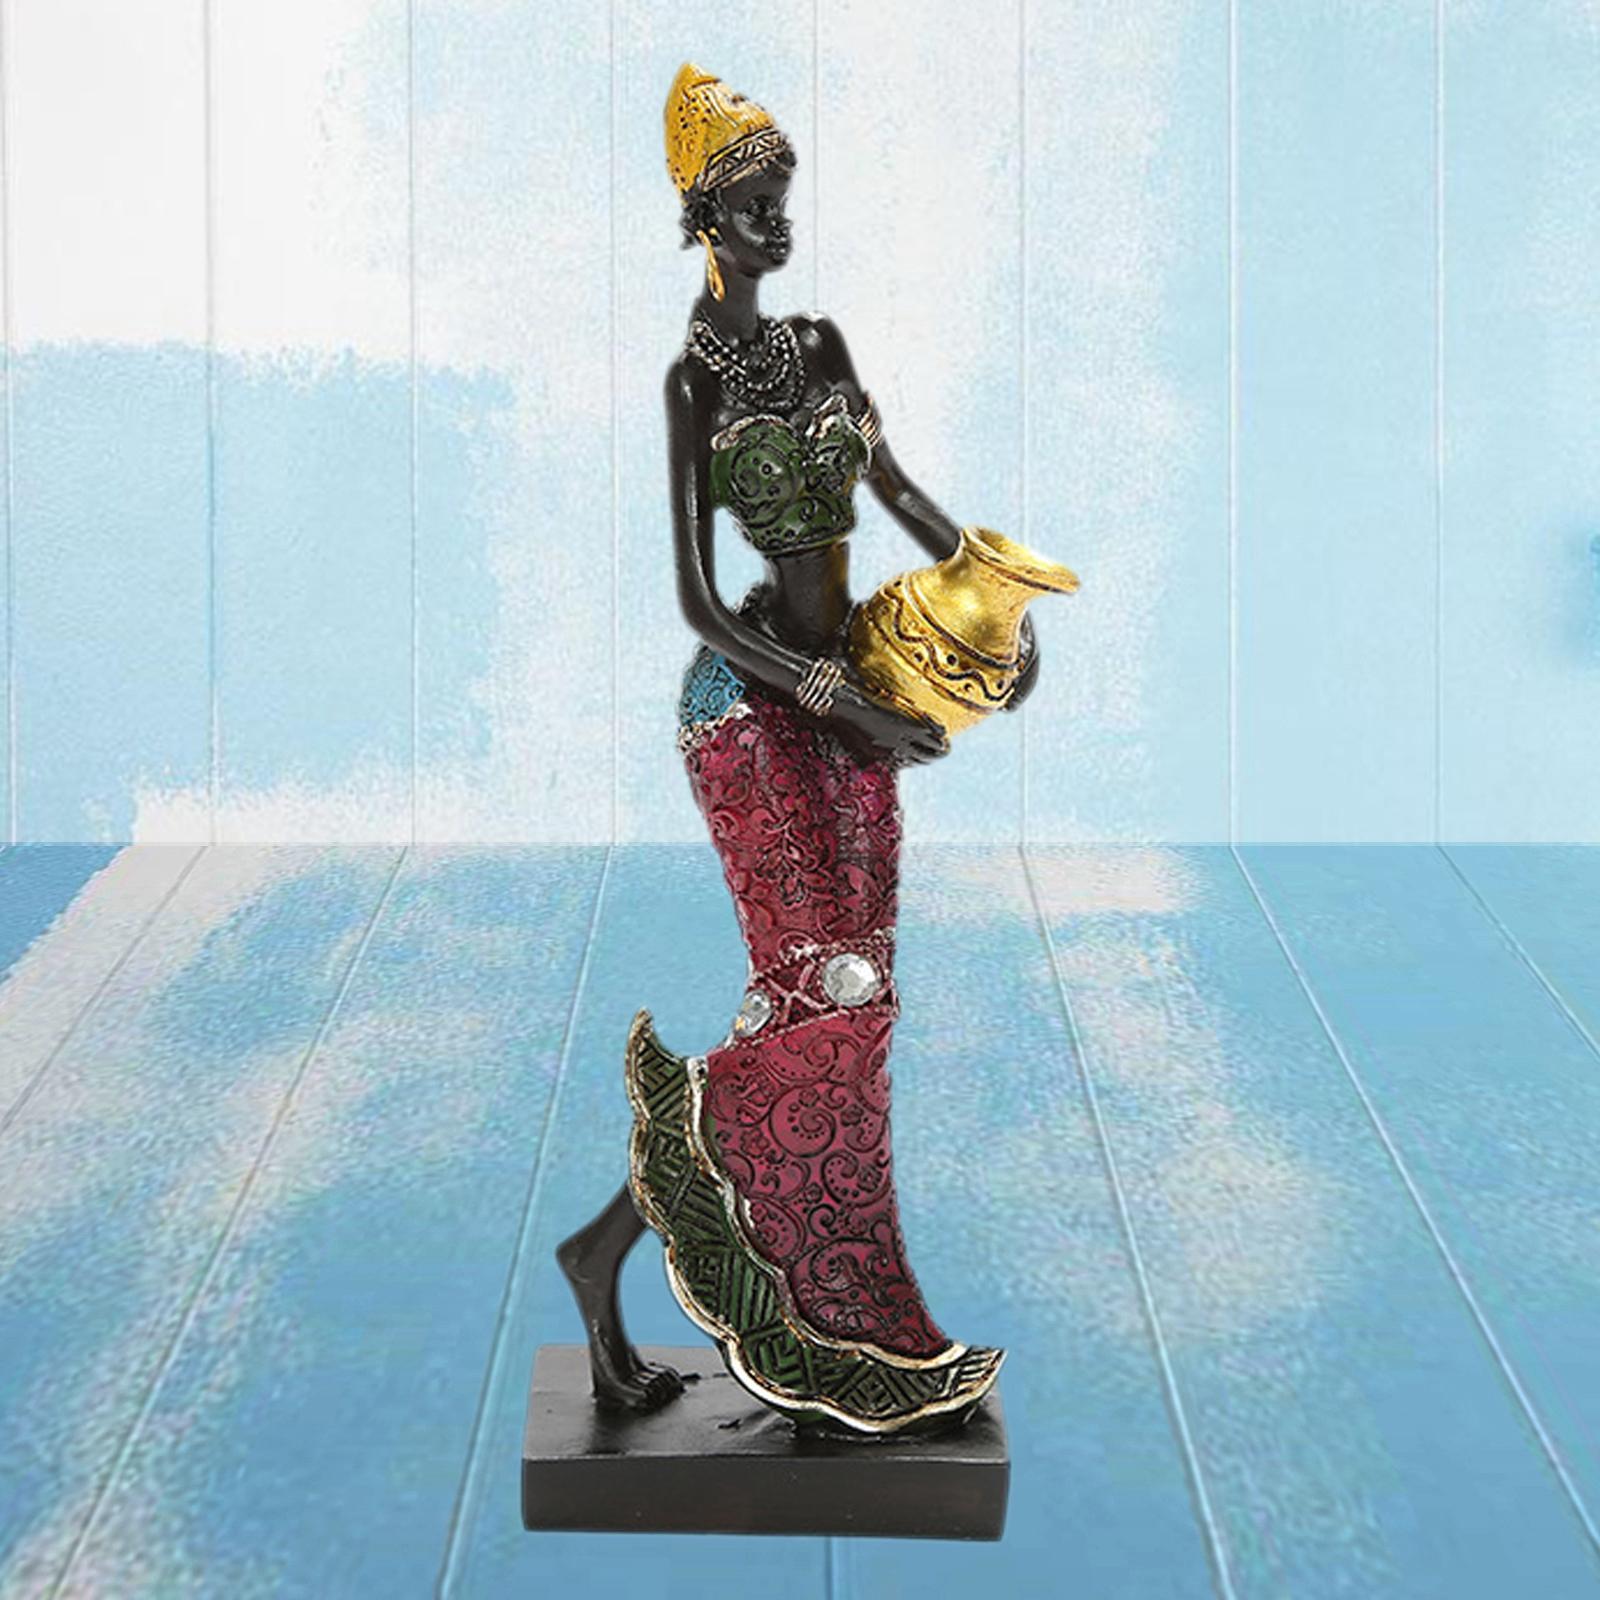 2pcs African Figurine Women Figure Tribal Lady Statue Sculpture Collectible Art